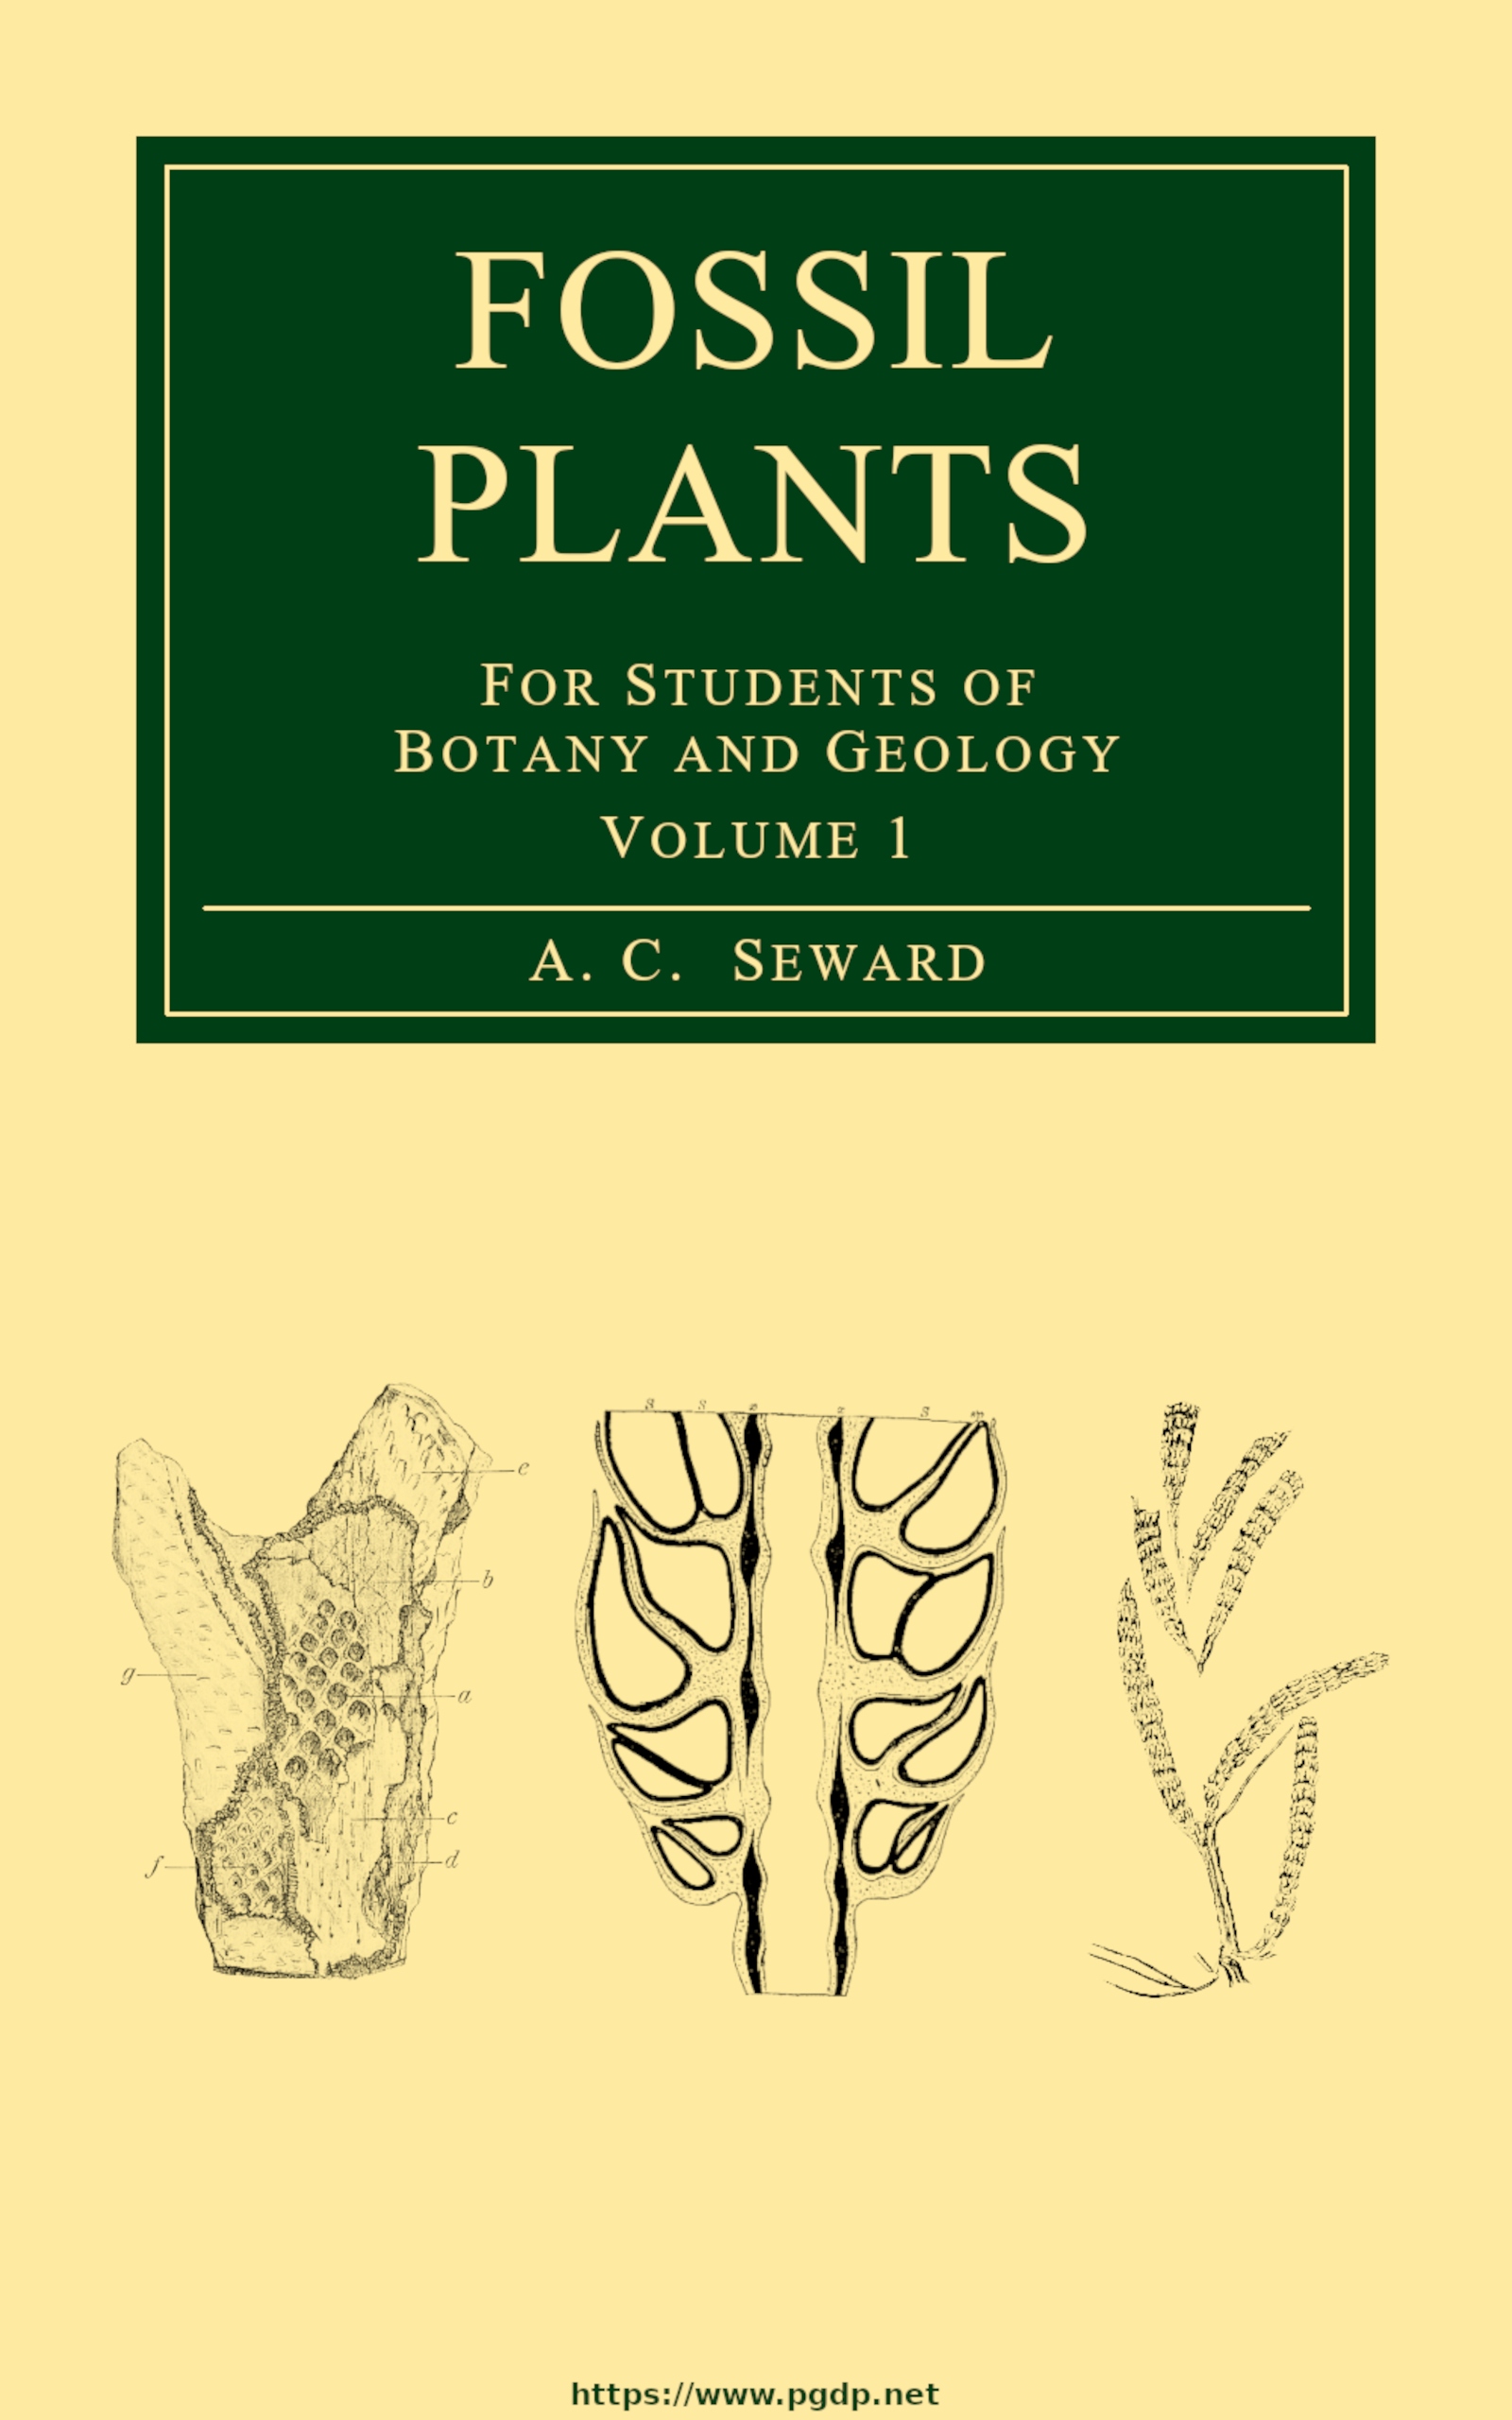 Fossil Plants, Volume 1, by A. C. Seward—A Project Gutenberg eBook